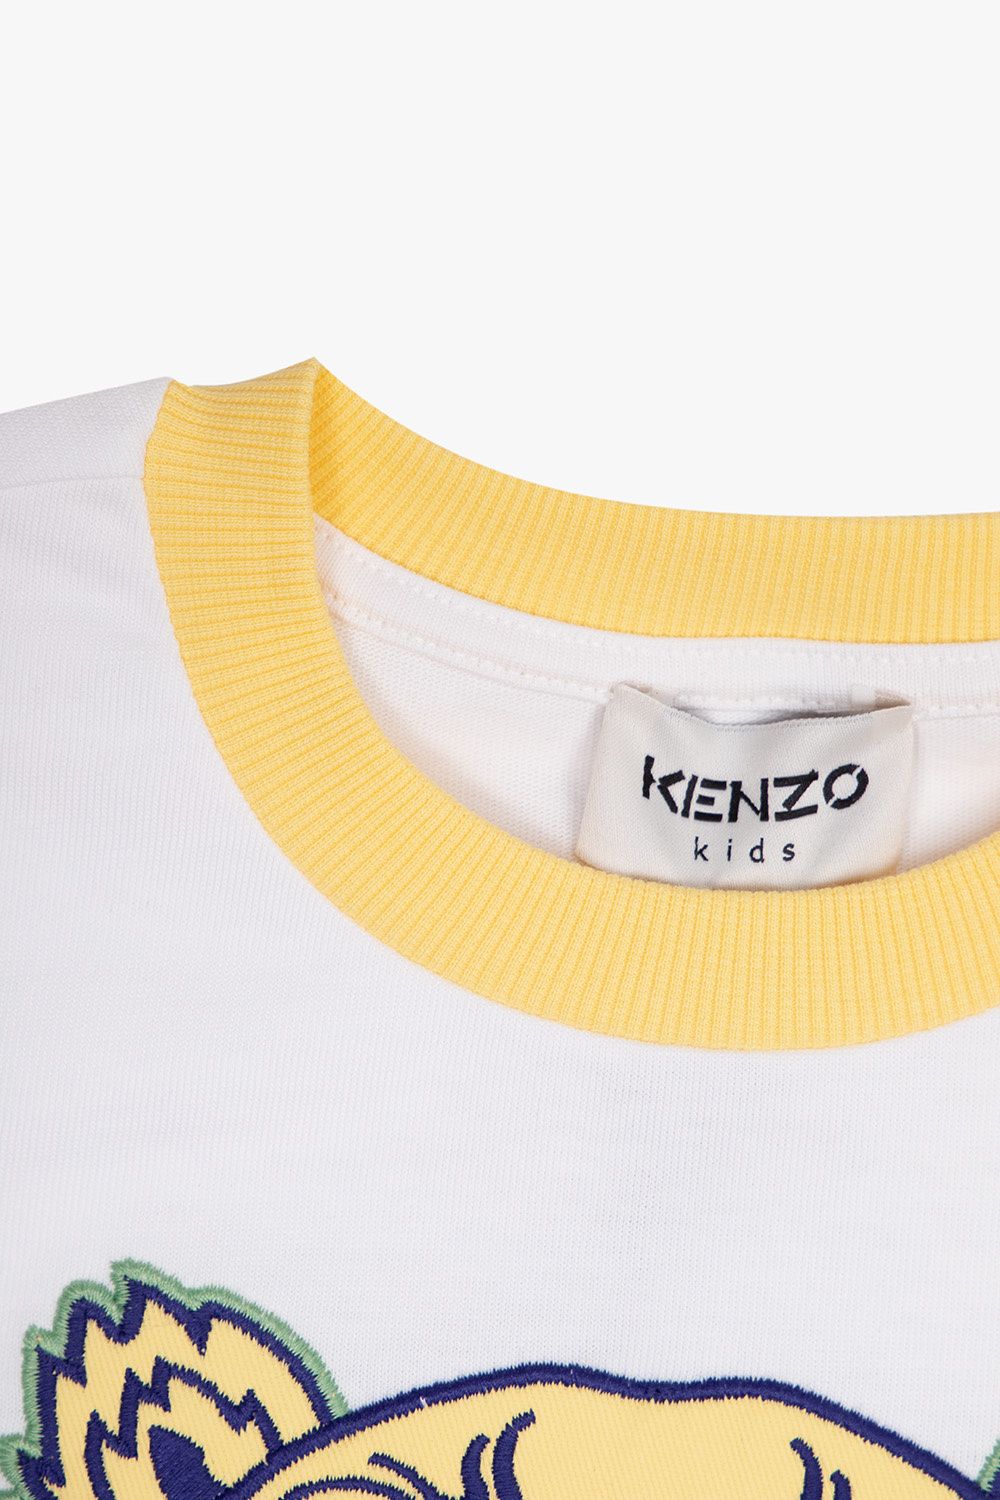 Kenzo Kids Stamina Marlow T-shirt